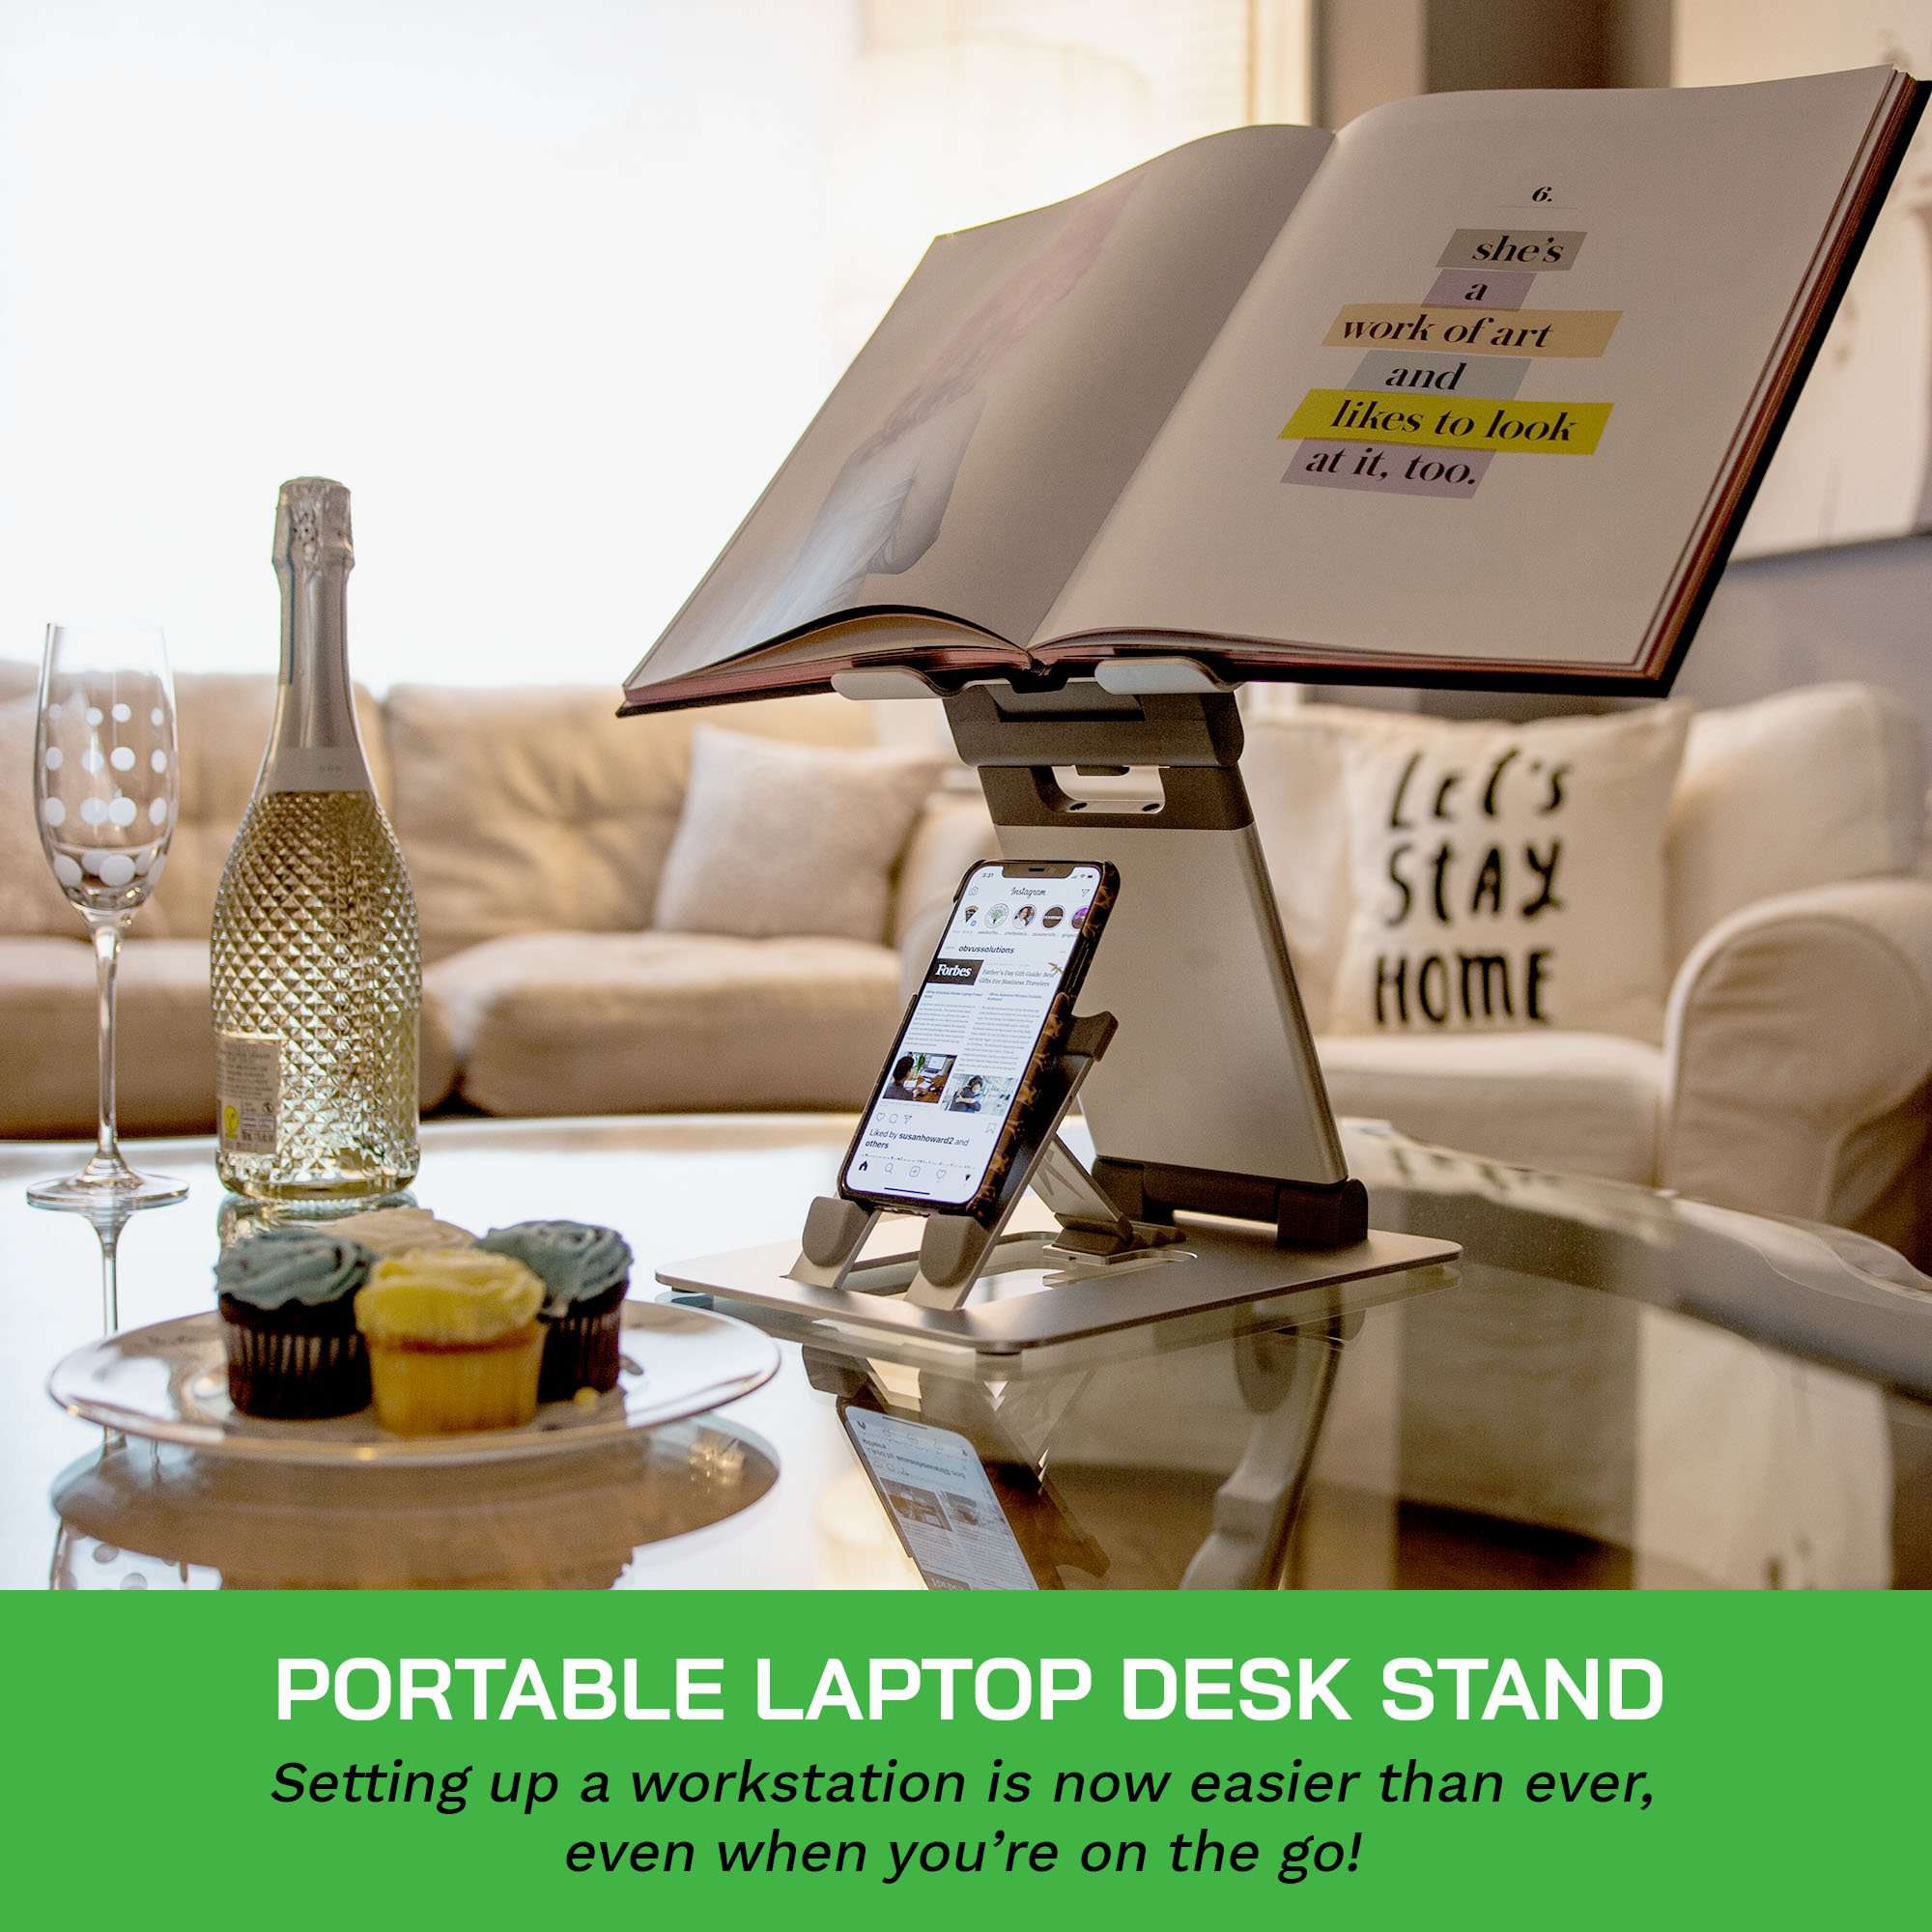 Portable laptop desk stand 